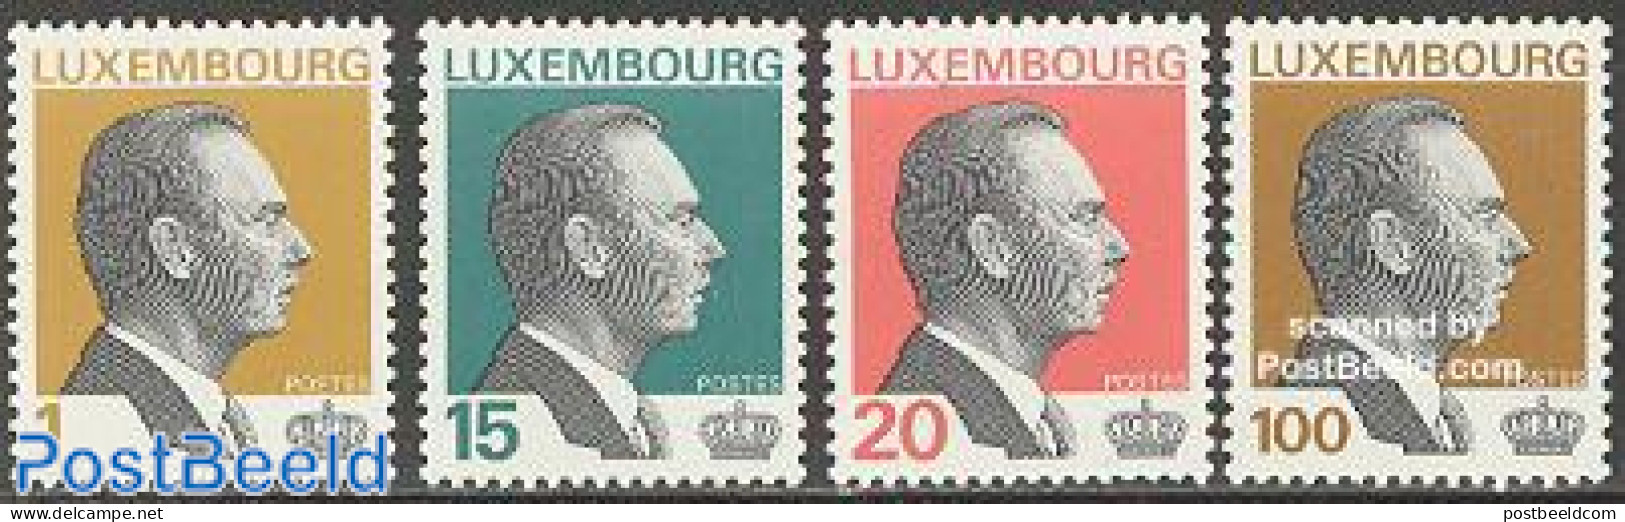 Luxemburg 1994 Definitives 4v, Mint NH - Unused Stamps